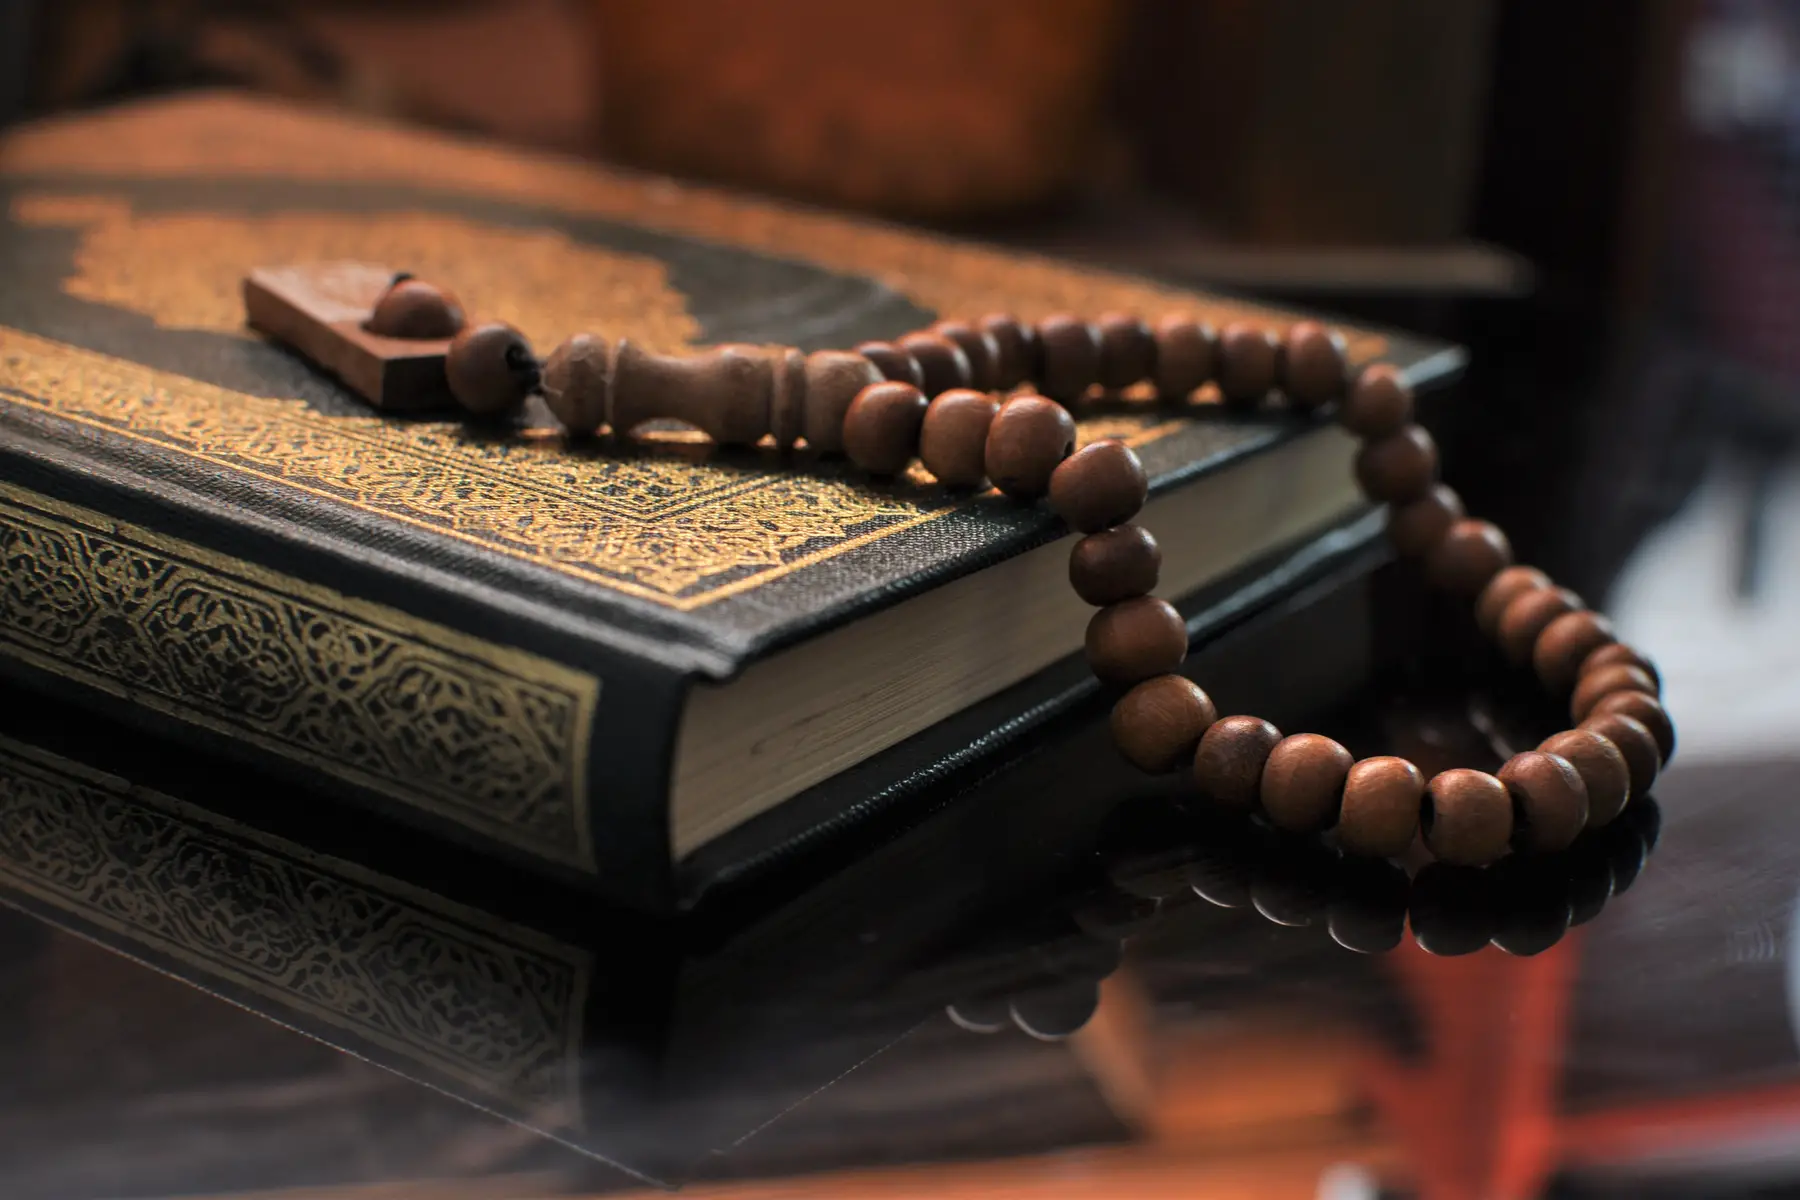 A Qur'an and misbaha, a set of Islamic prayer beads